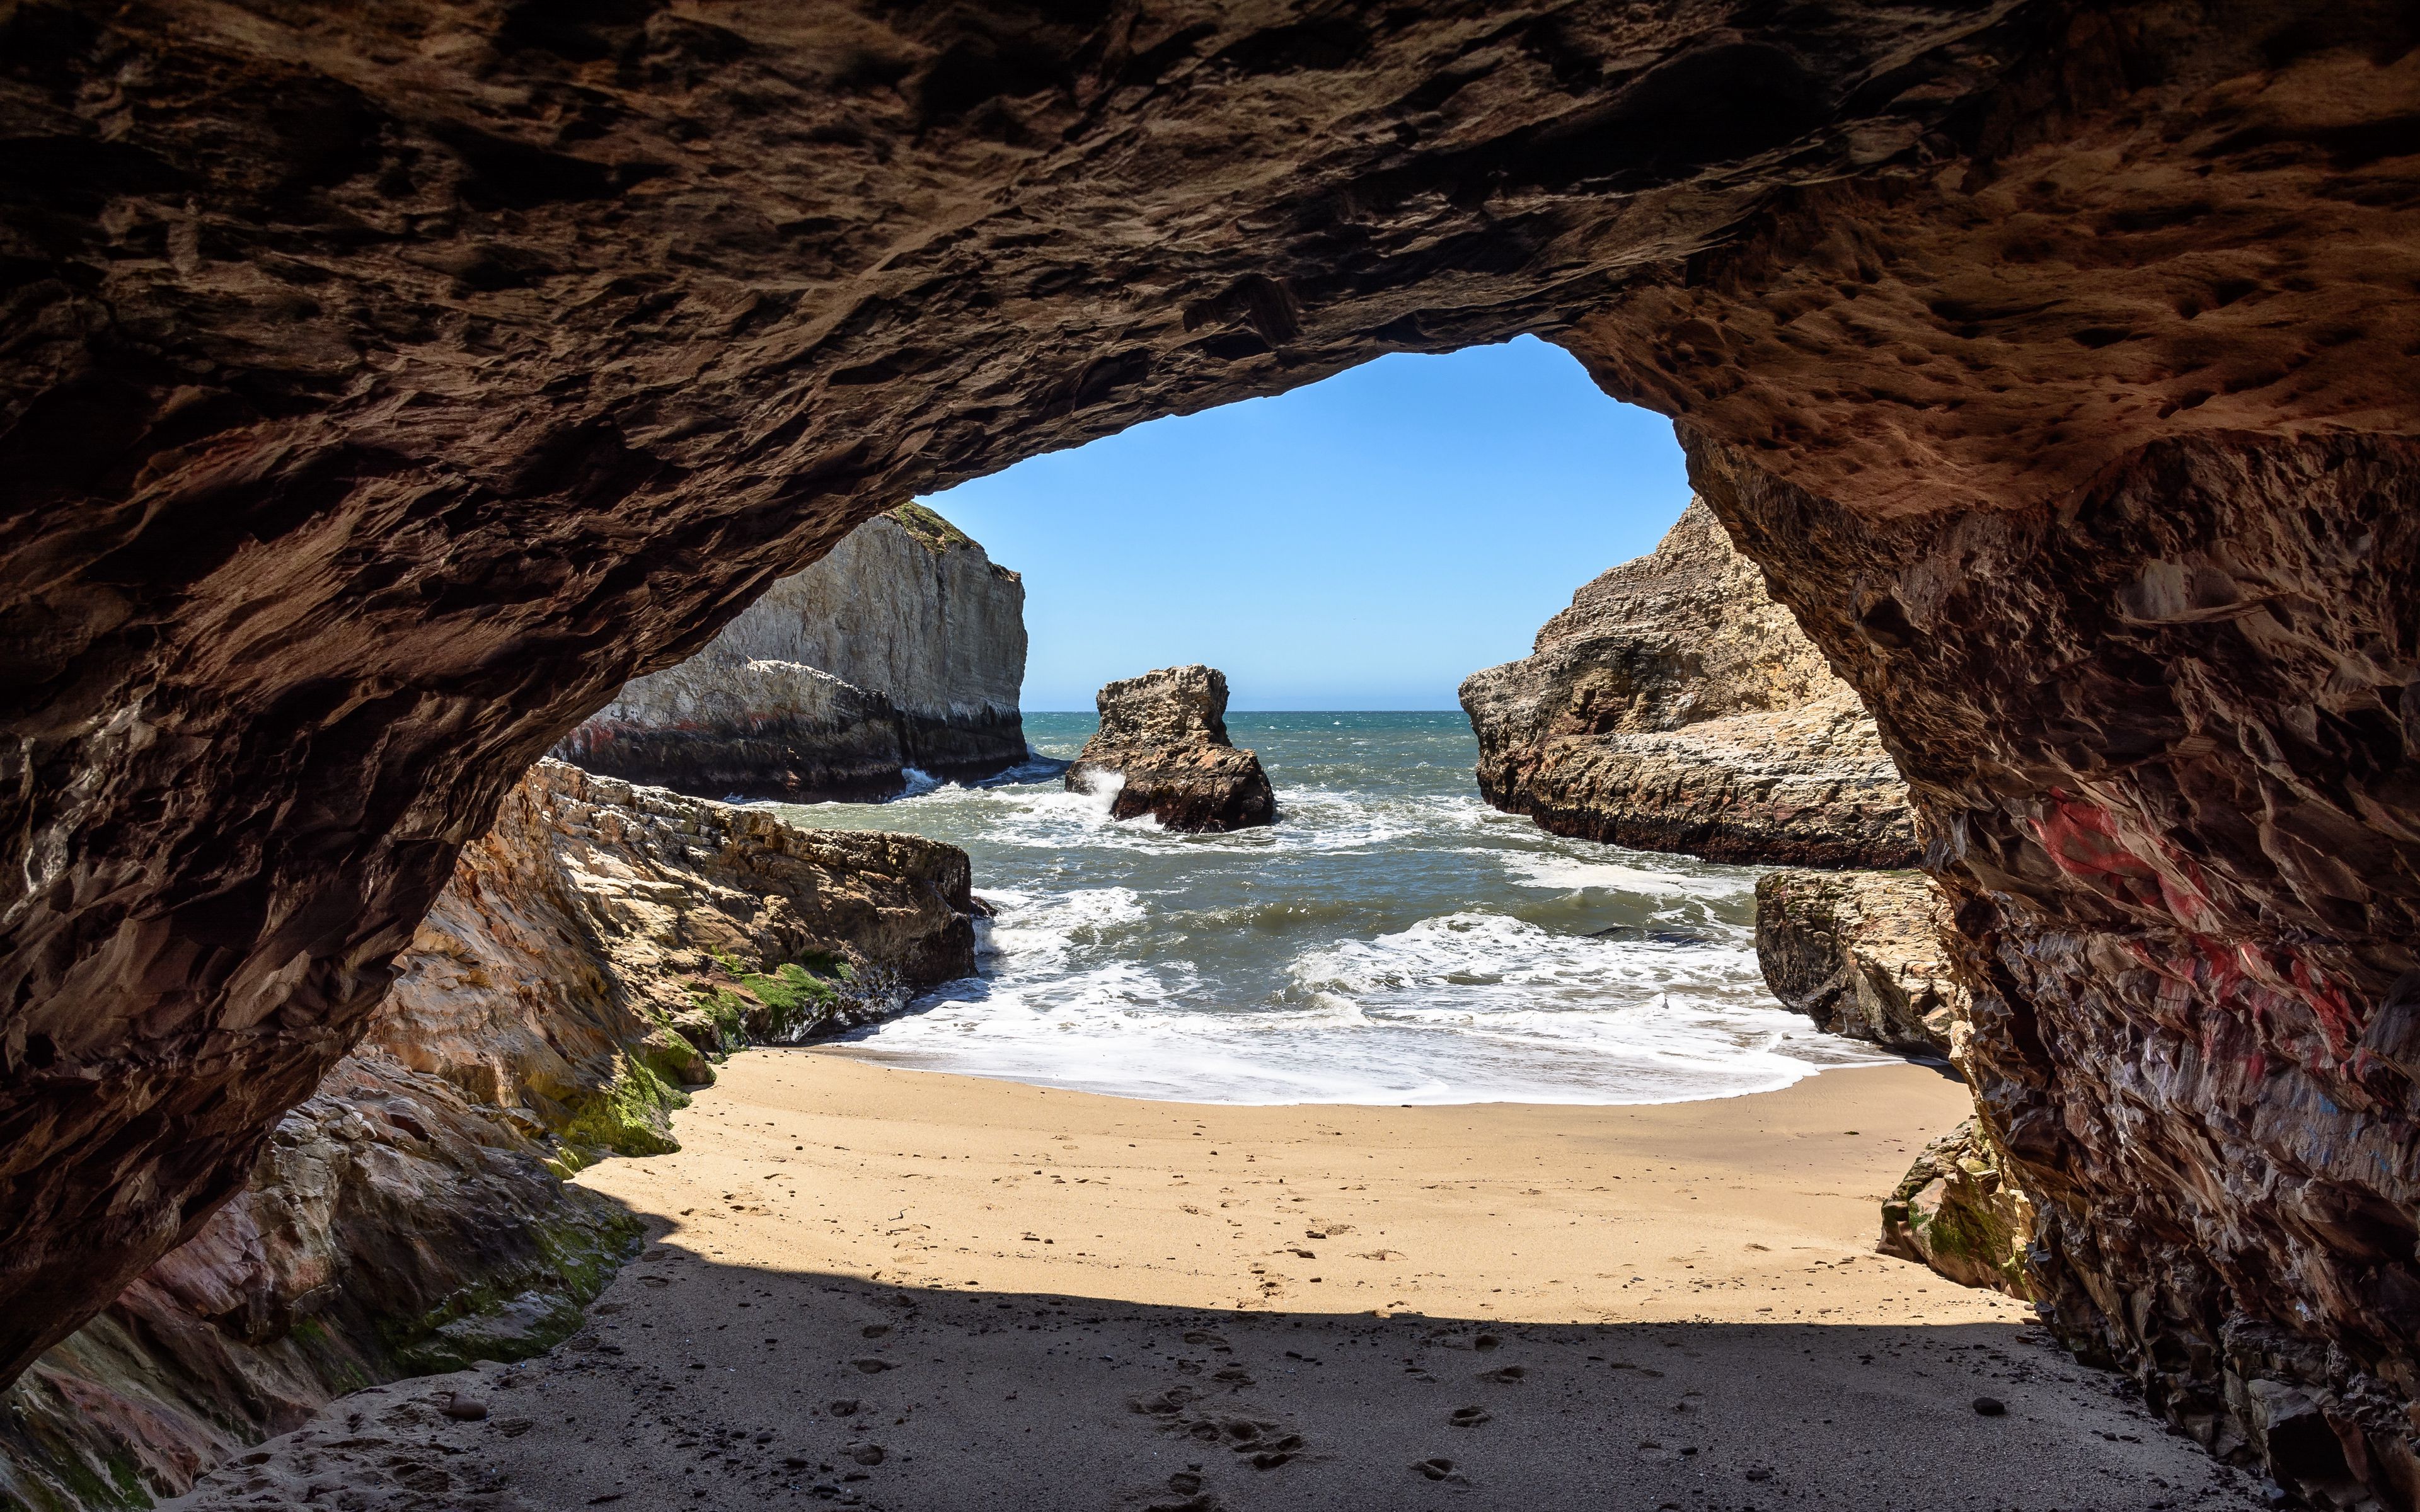 Fondos de pantalla Playa a través de cueva